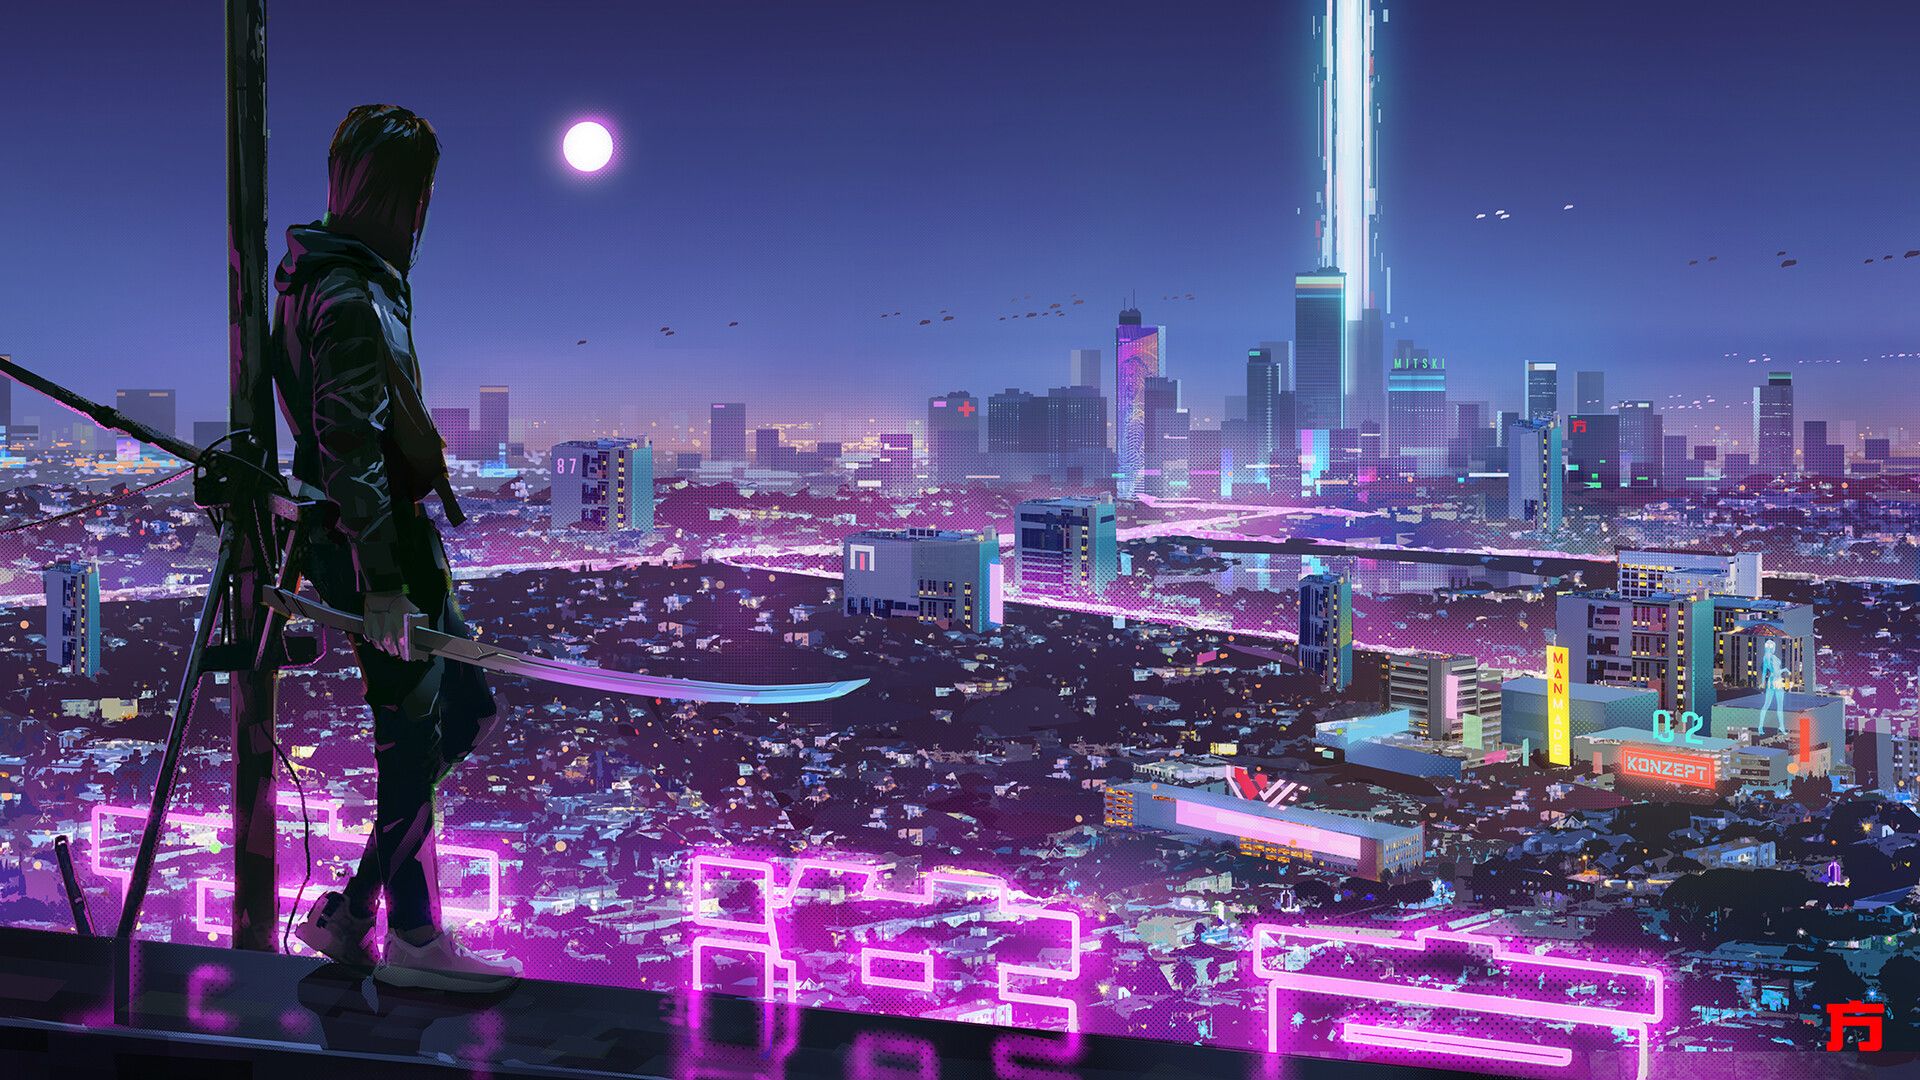 Night City Cyberpunk 2077 Wallpapers